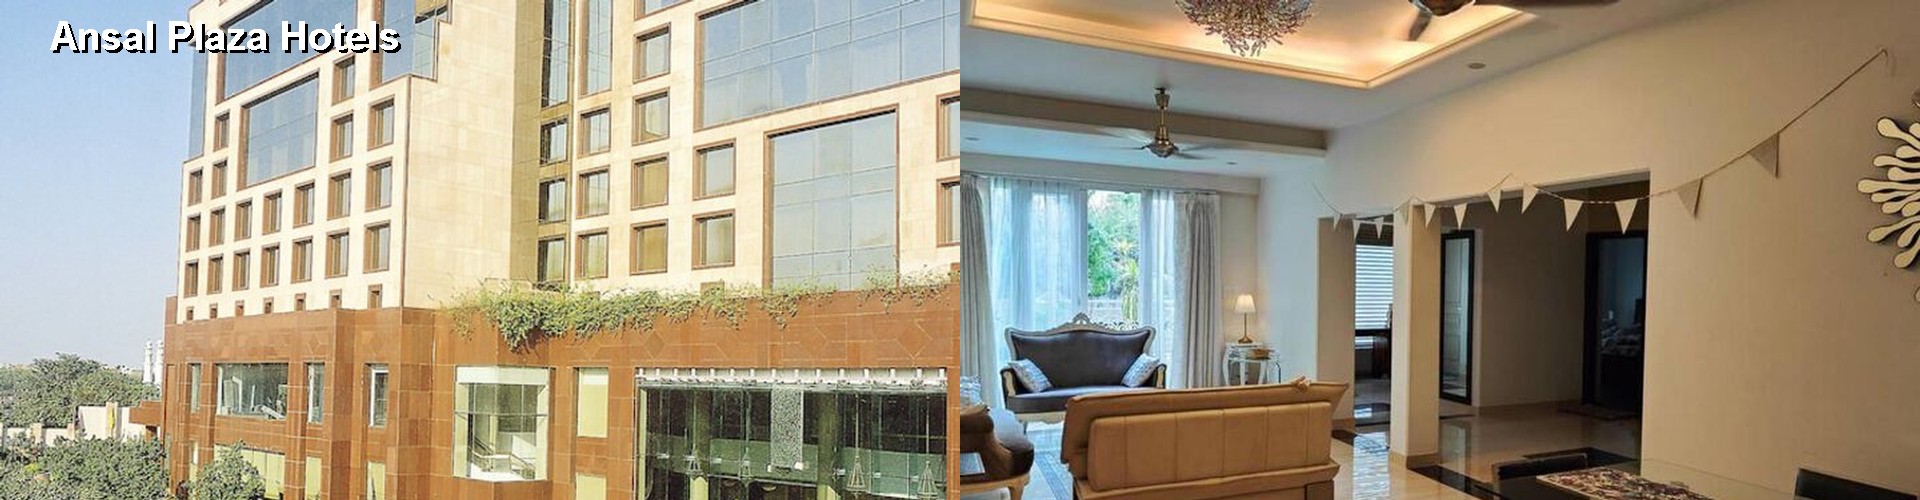 5 Best Hotels near Ansal Plaza